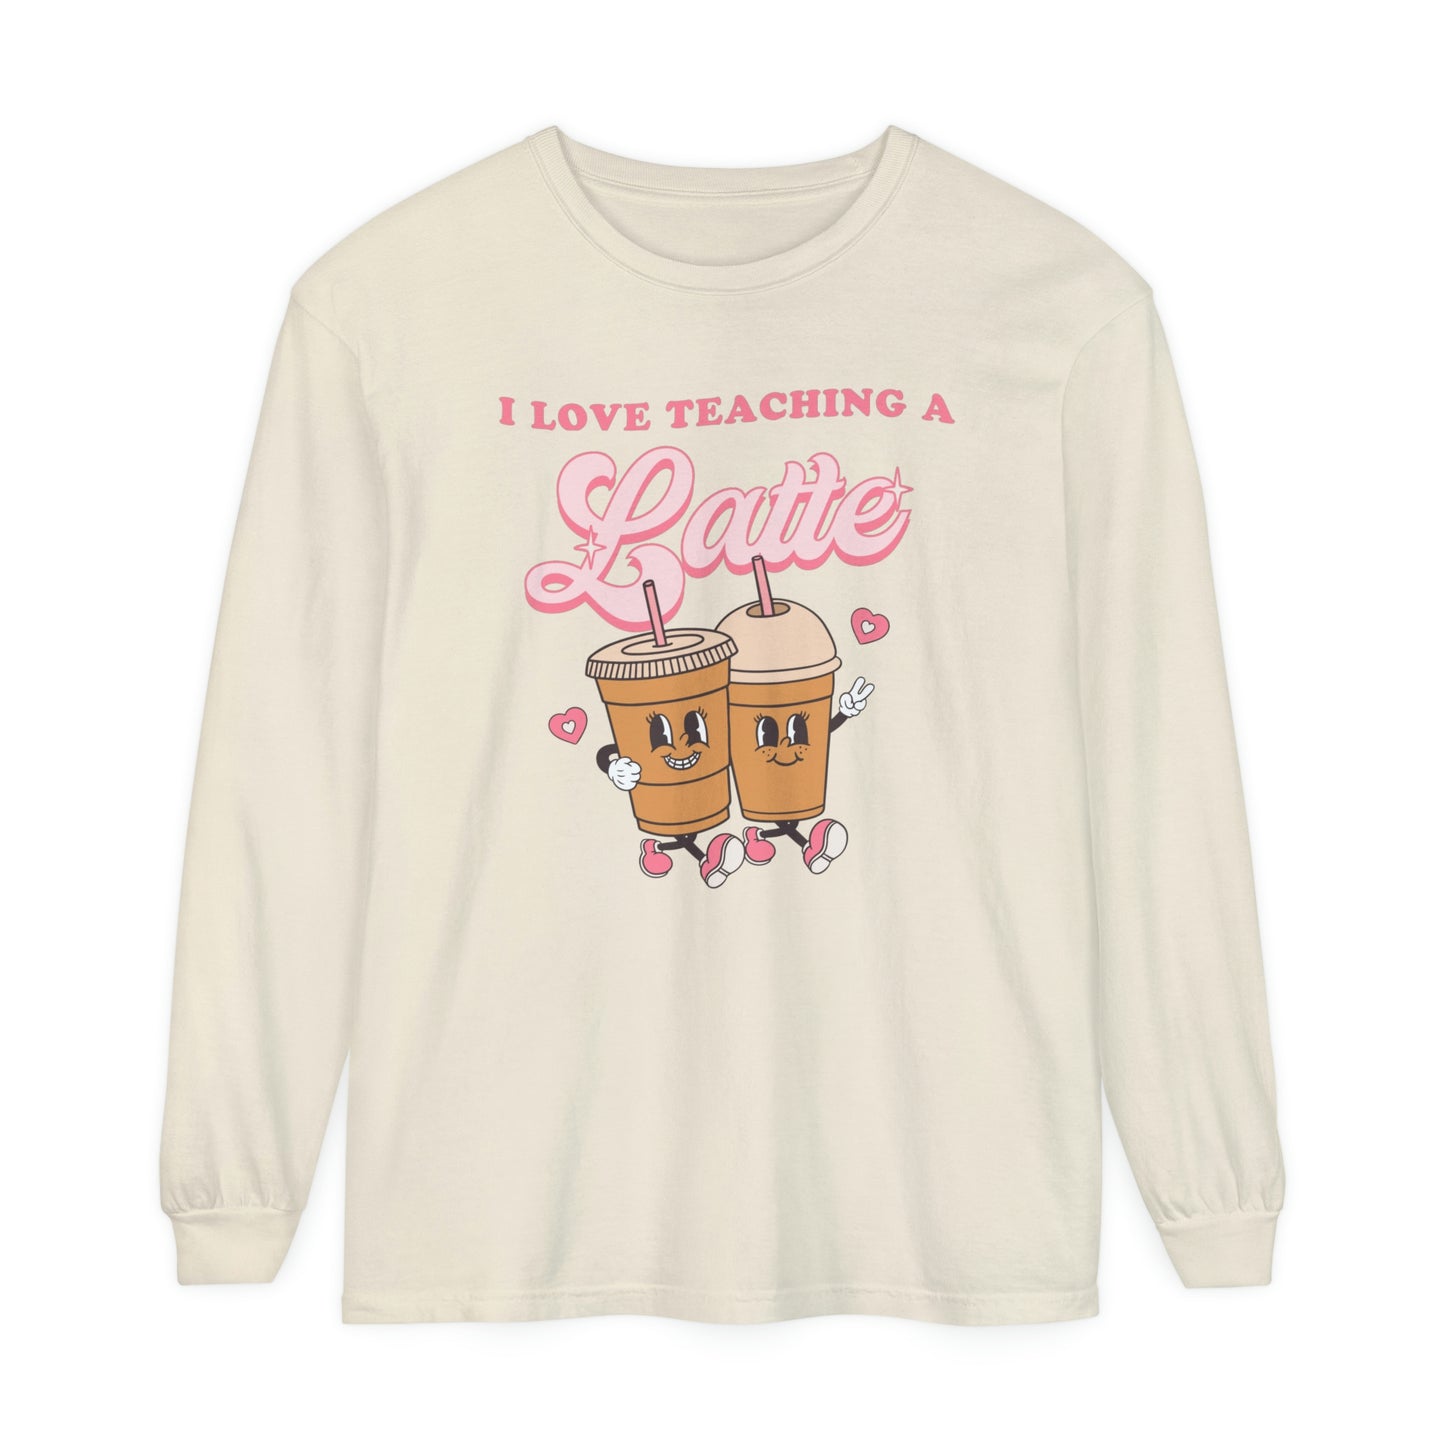 I Love Teaching a Latte Long Sleeve Comfort Colors T-Shirt